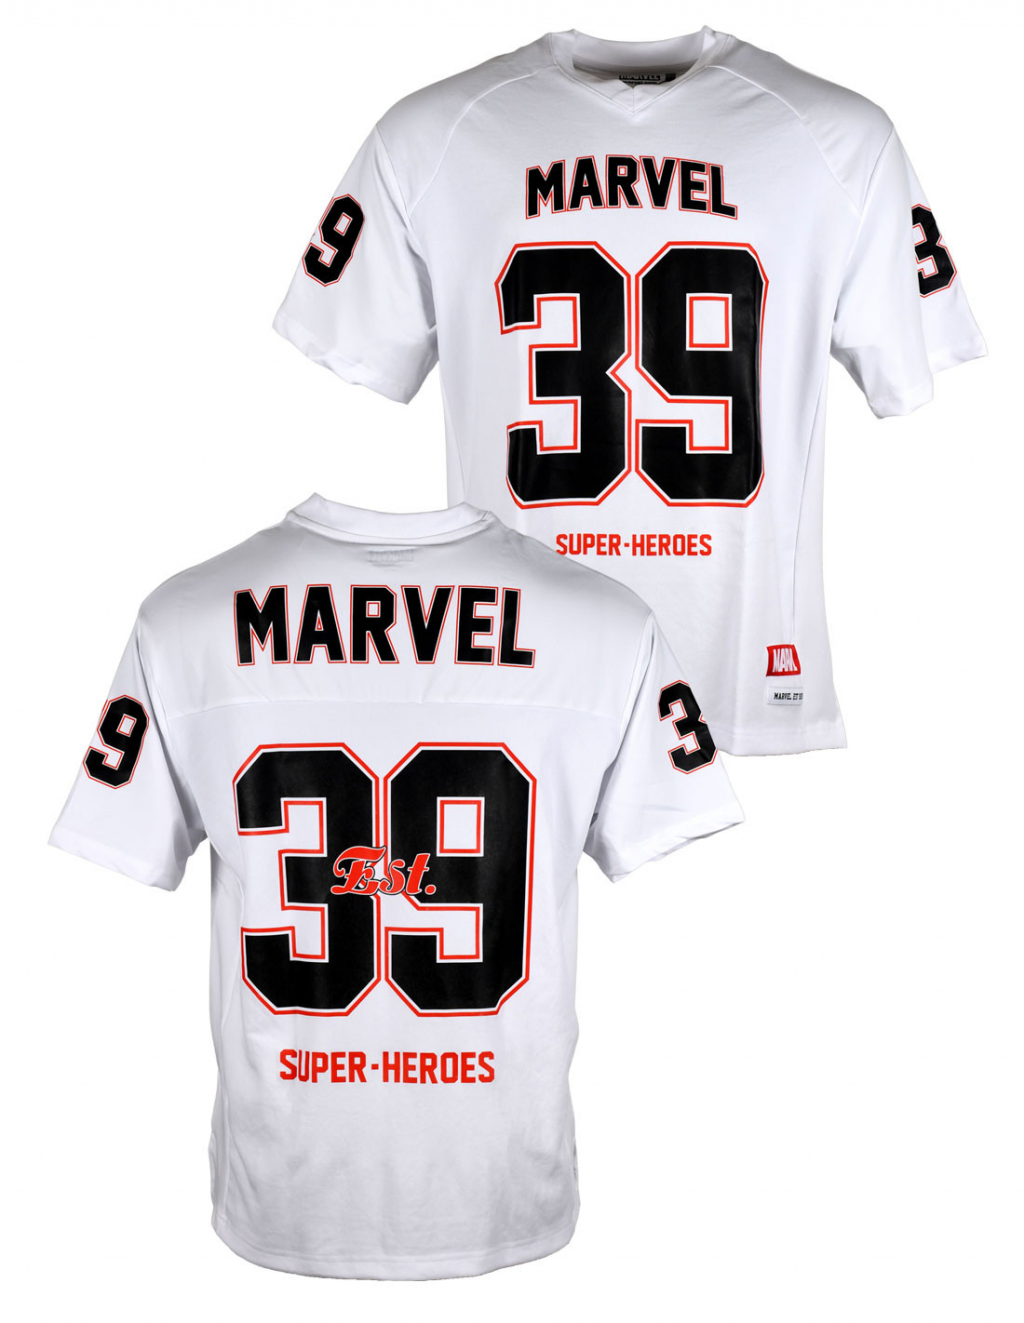 MARVEL - Super Heroes - T-Shirt Sports US Replica unisex (XL)